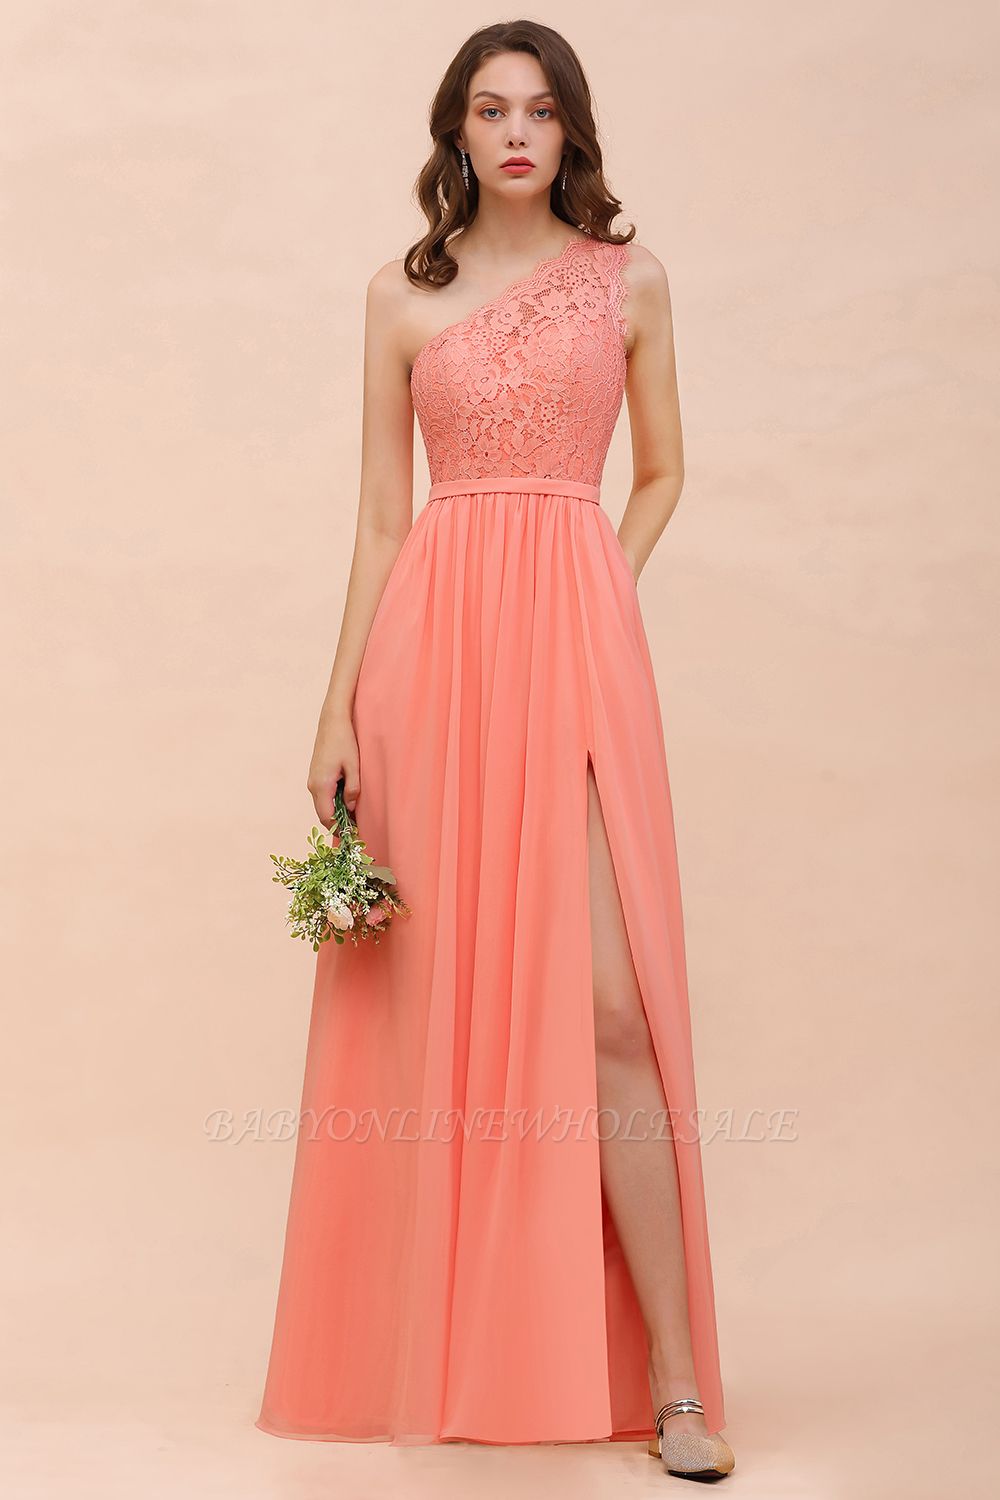 One Shoulder Floral Lace Aline Bridesmaid Dress with Side Slit